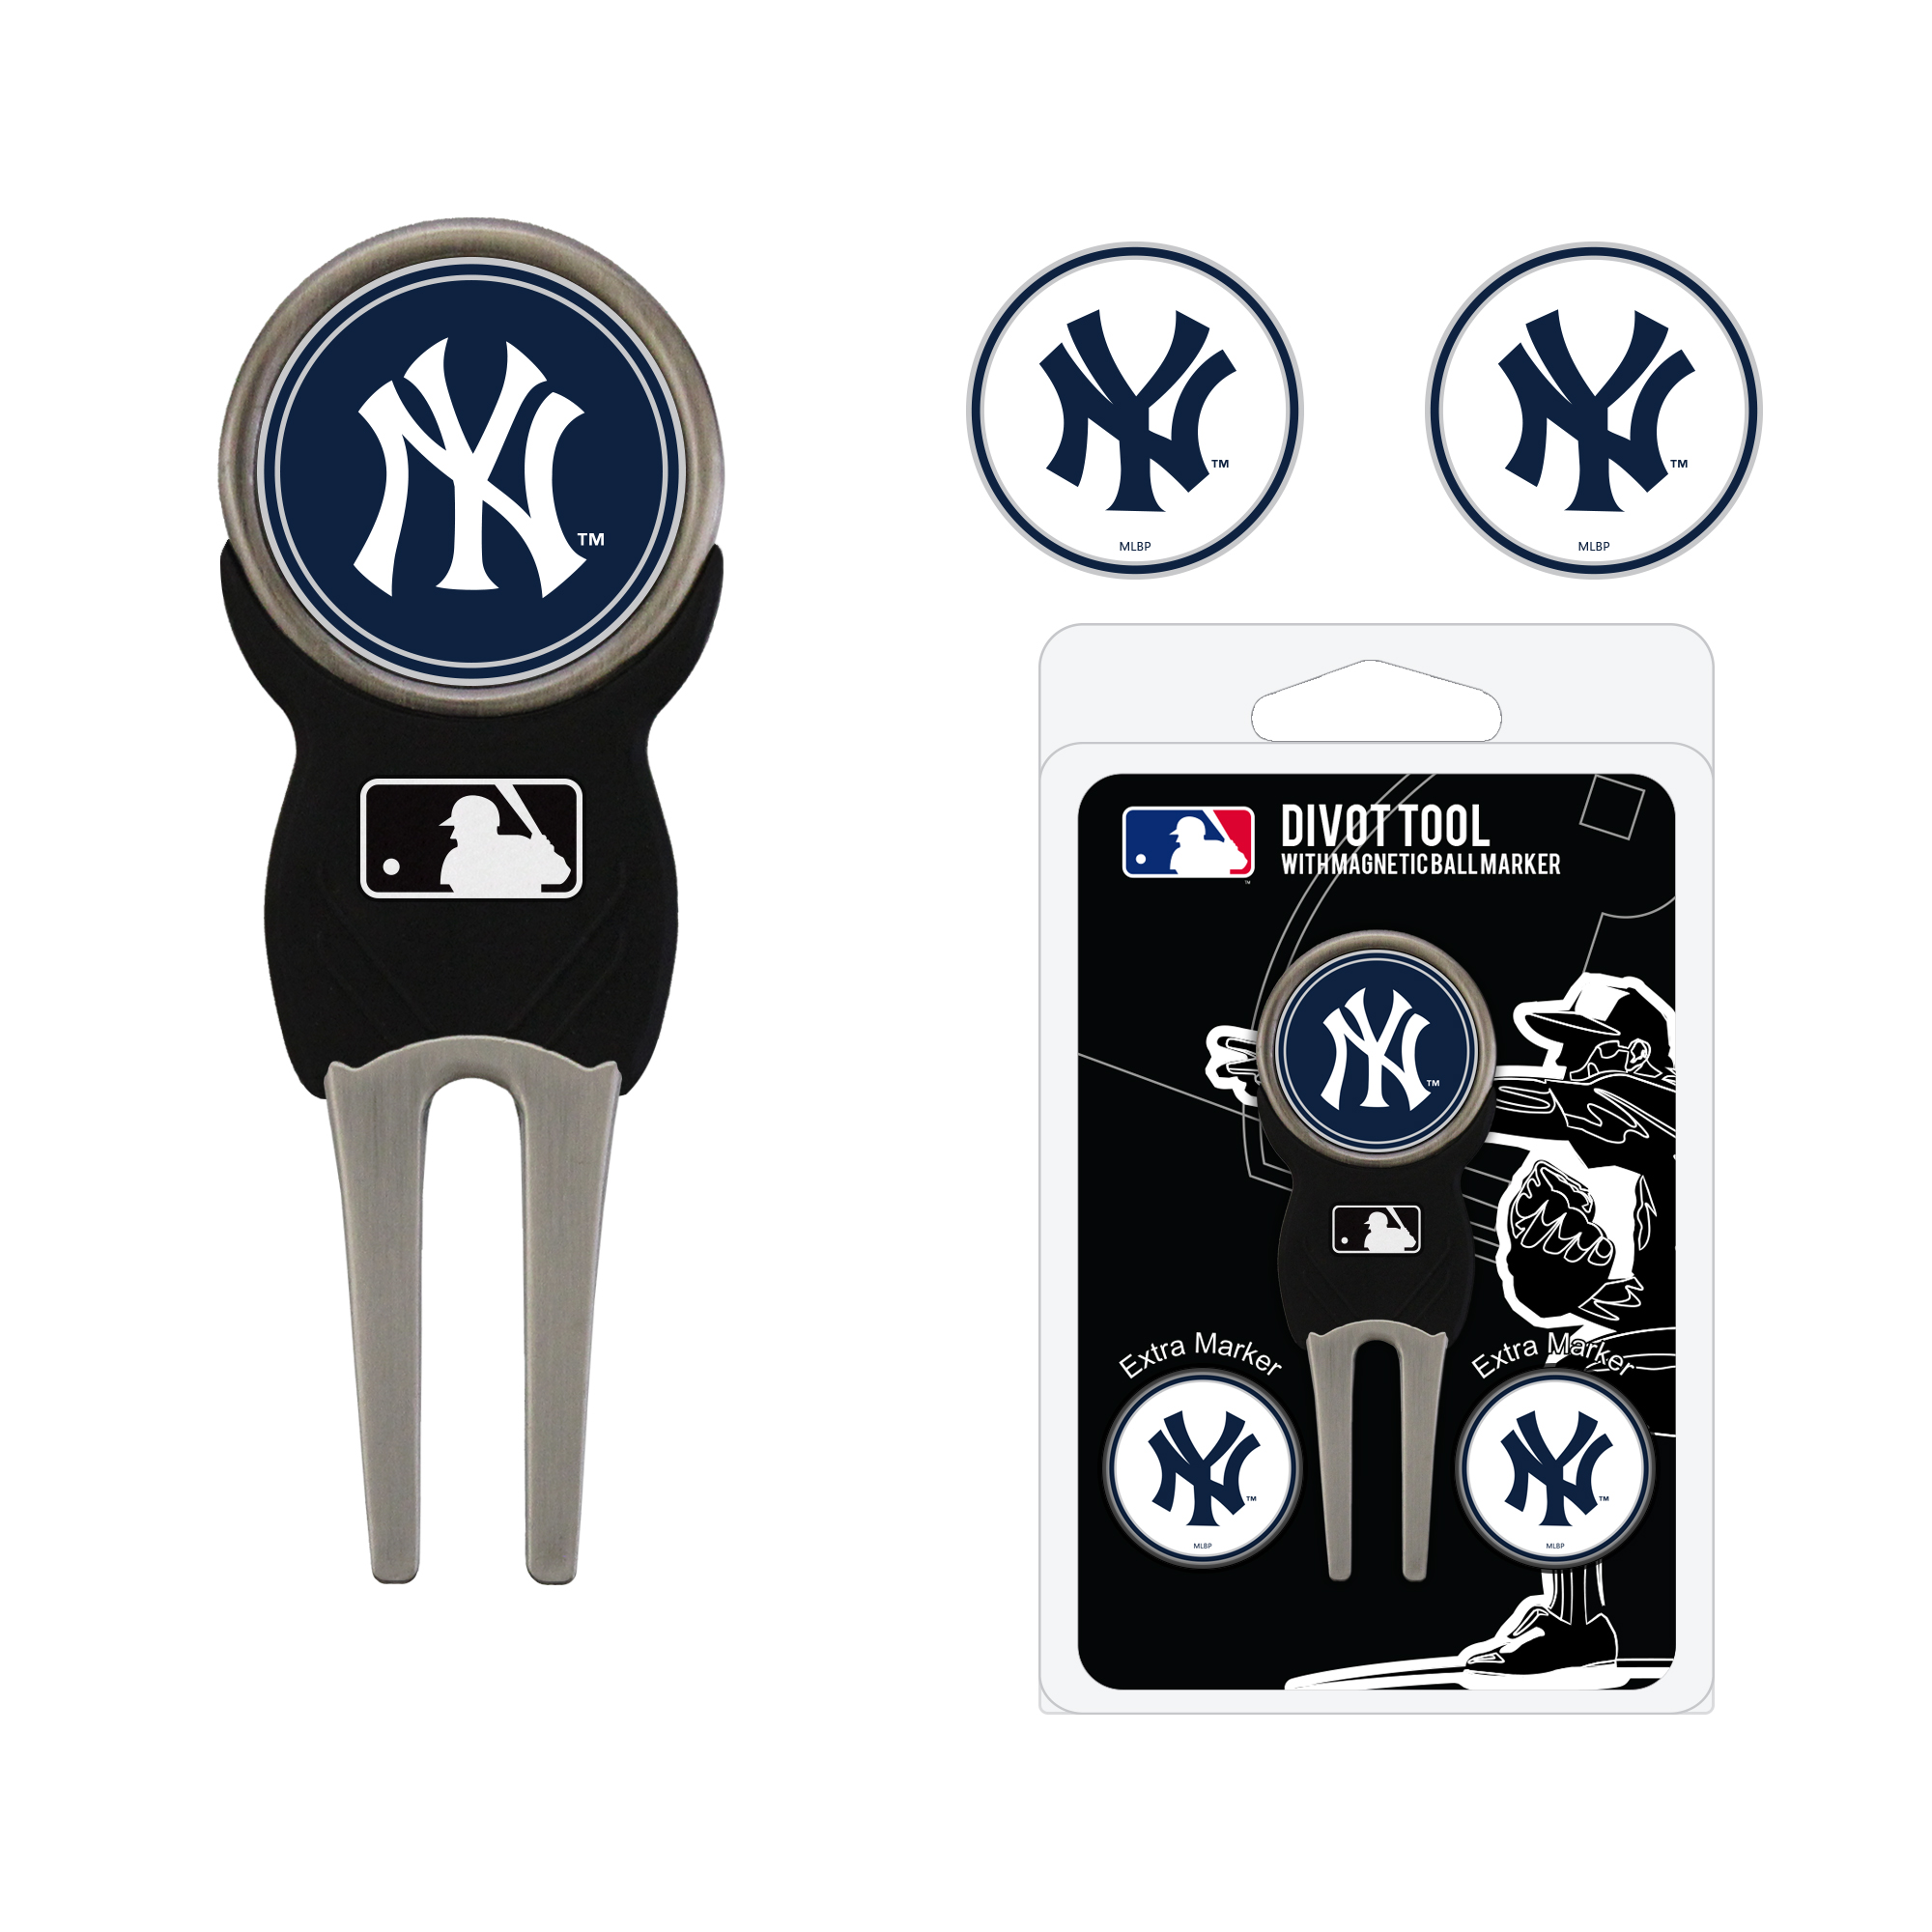 New York Yankees Divot Tool Pack